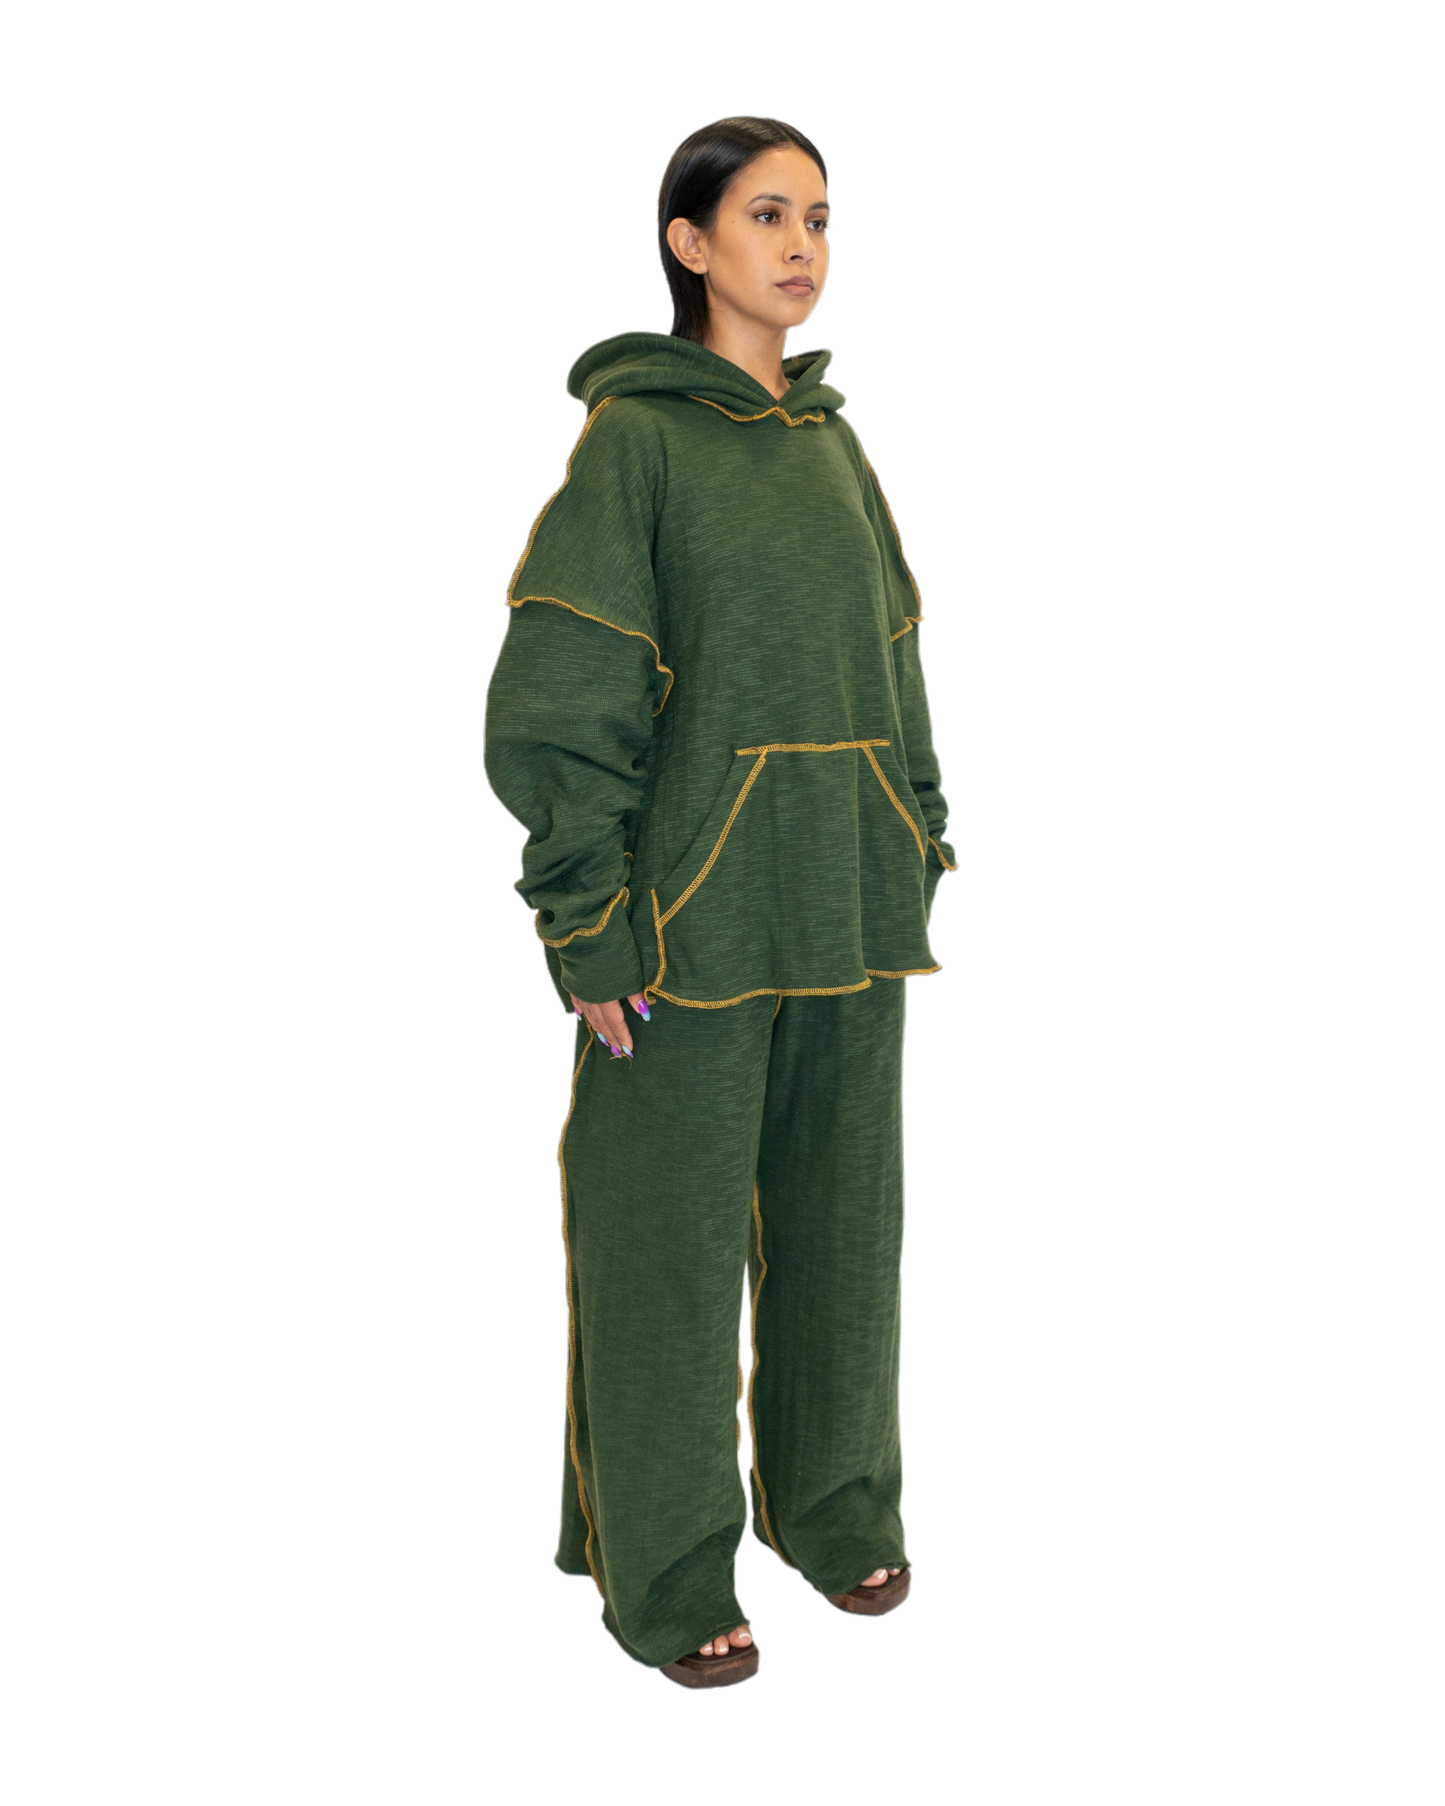 Forest Green Sweatsuit